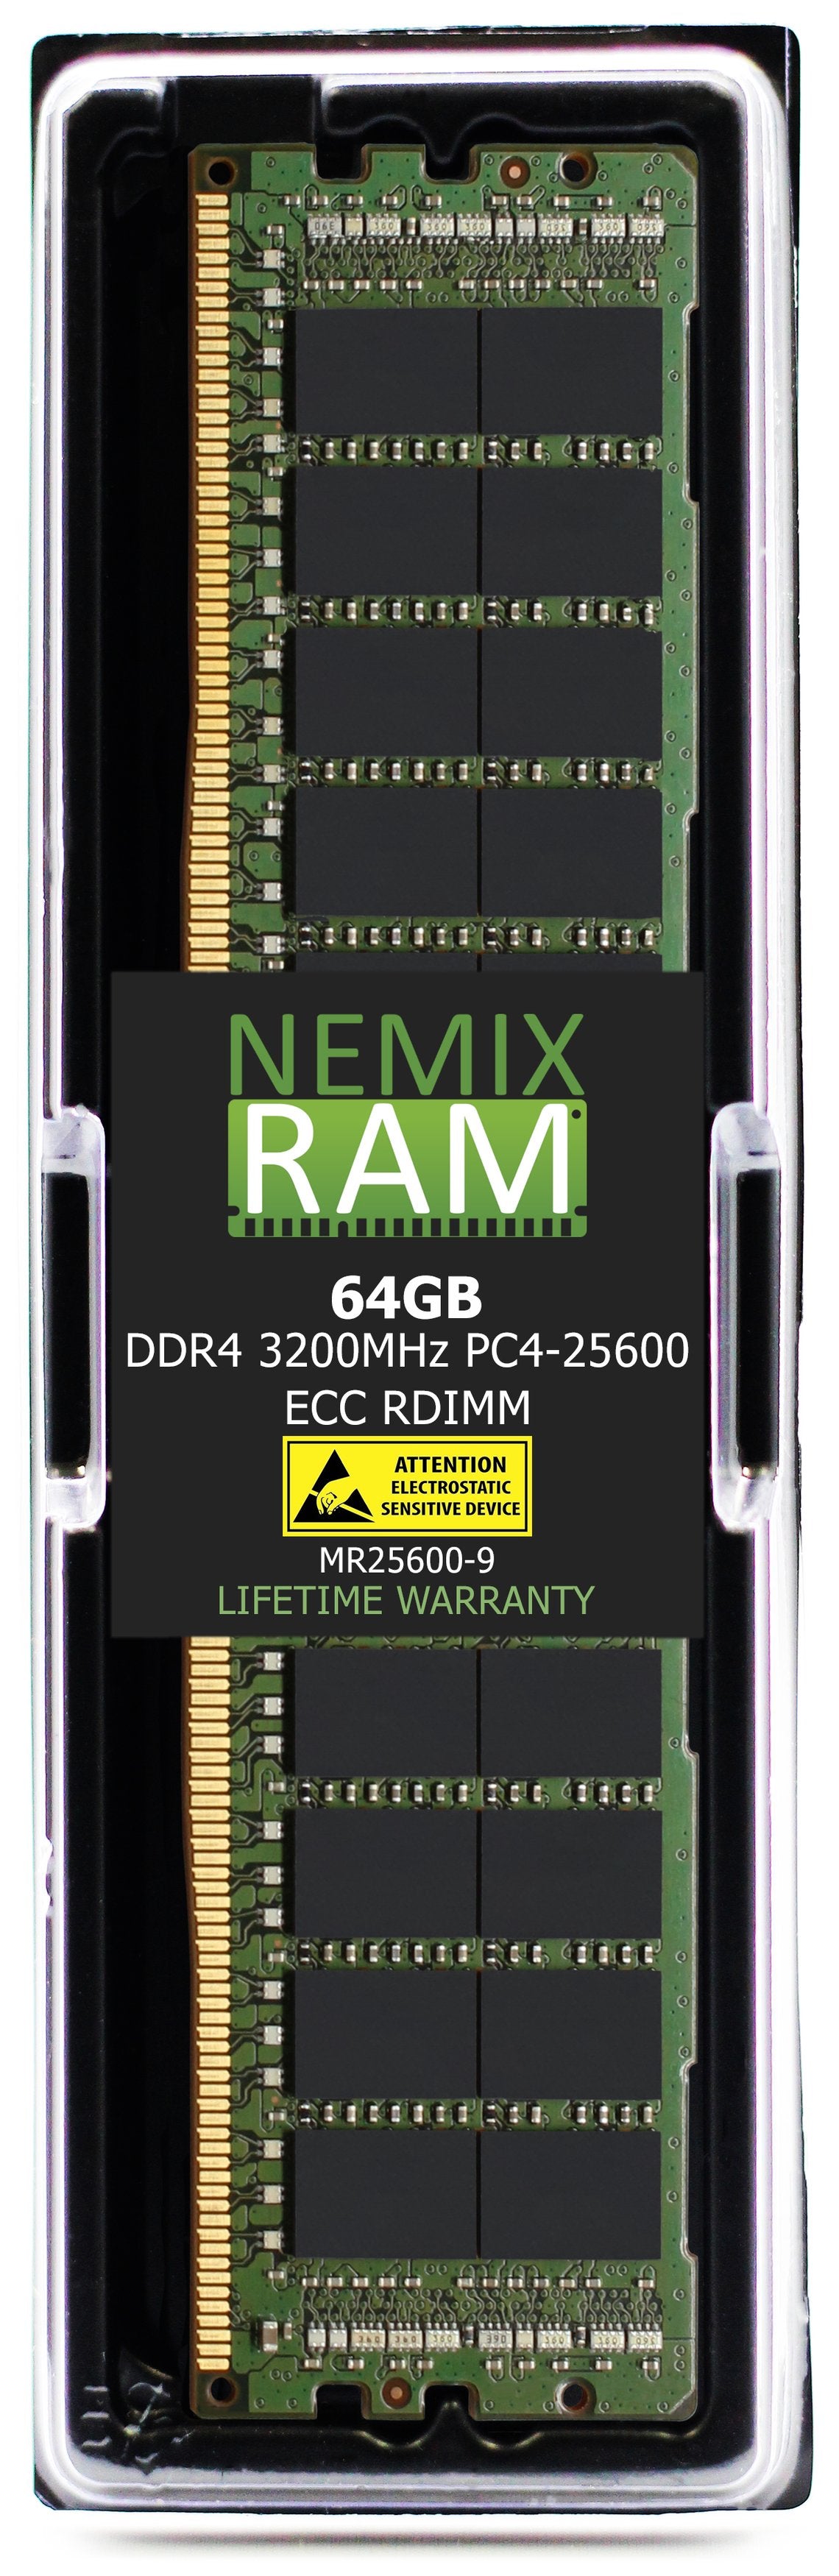 64GB DDR4 3200MHZ PC4-25600 RDIMM Compatible with Supermicro MEM-DR464L-SL01-ER32